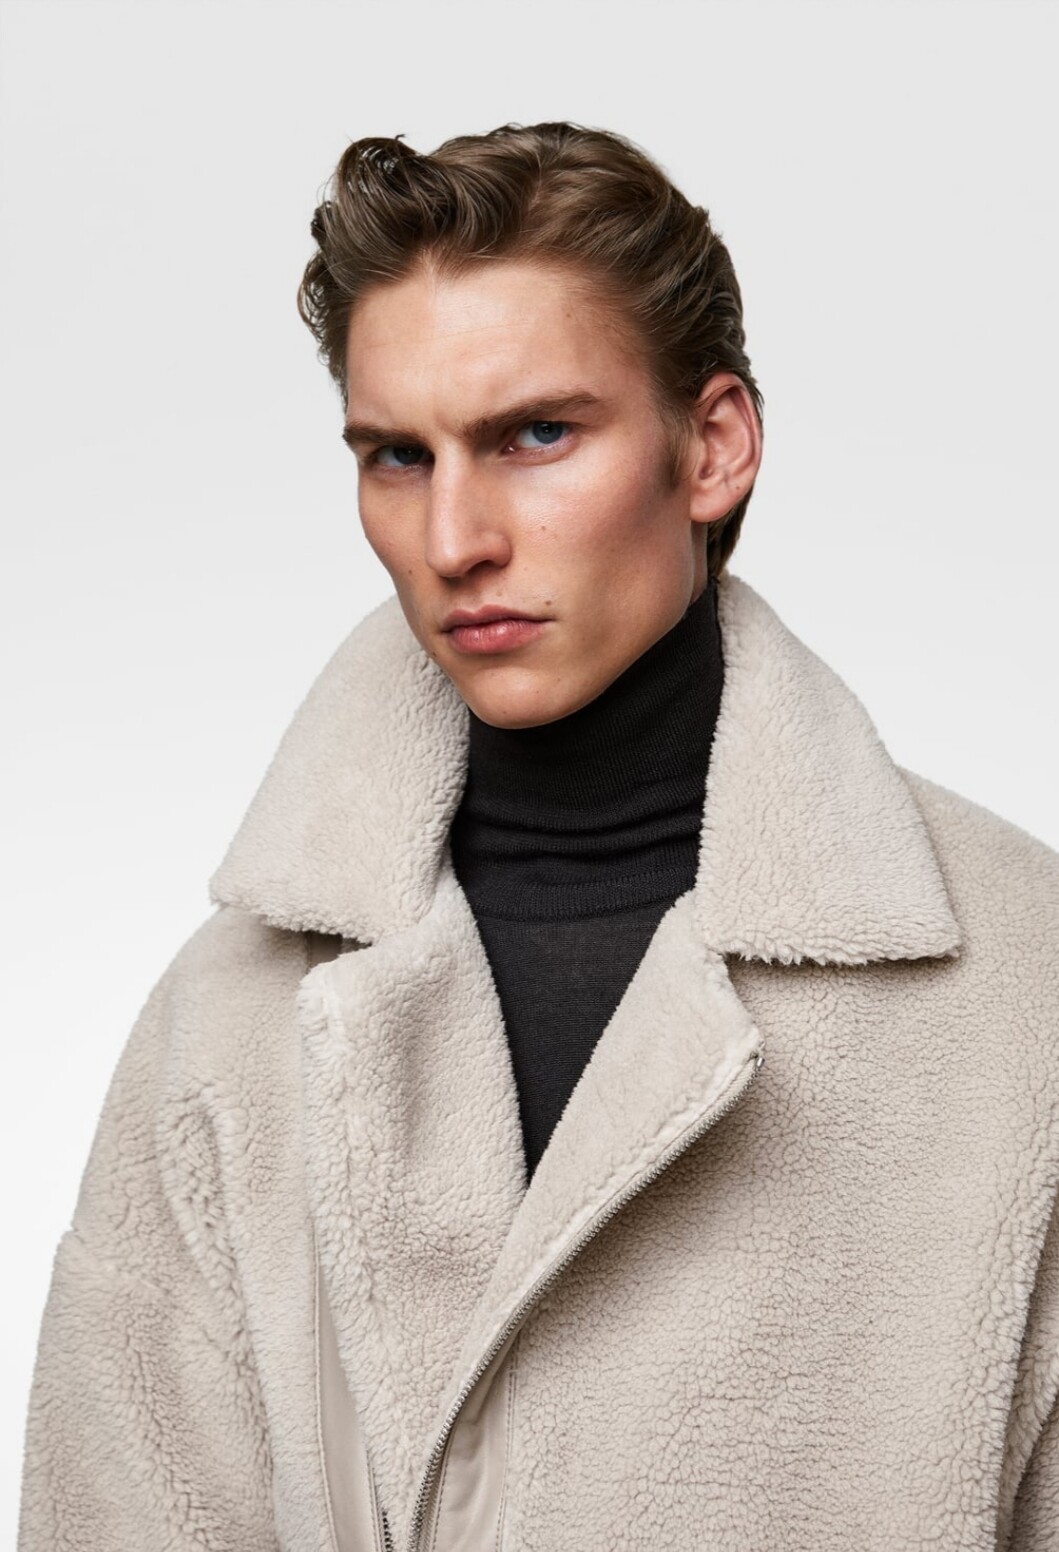 Zara male model, whats his name? - Model ID - Bellazon